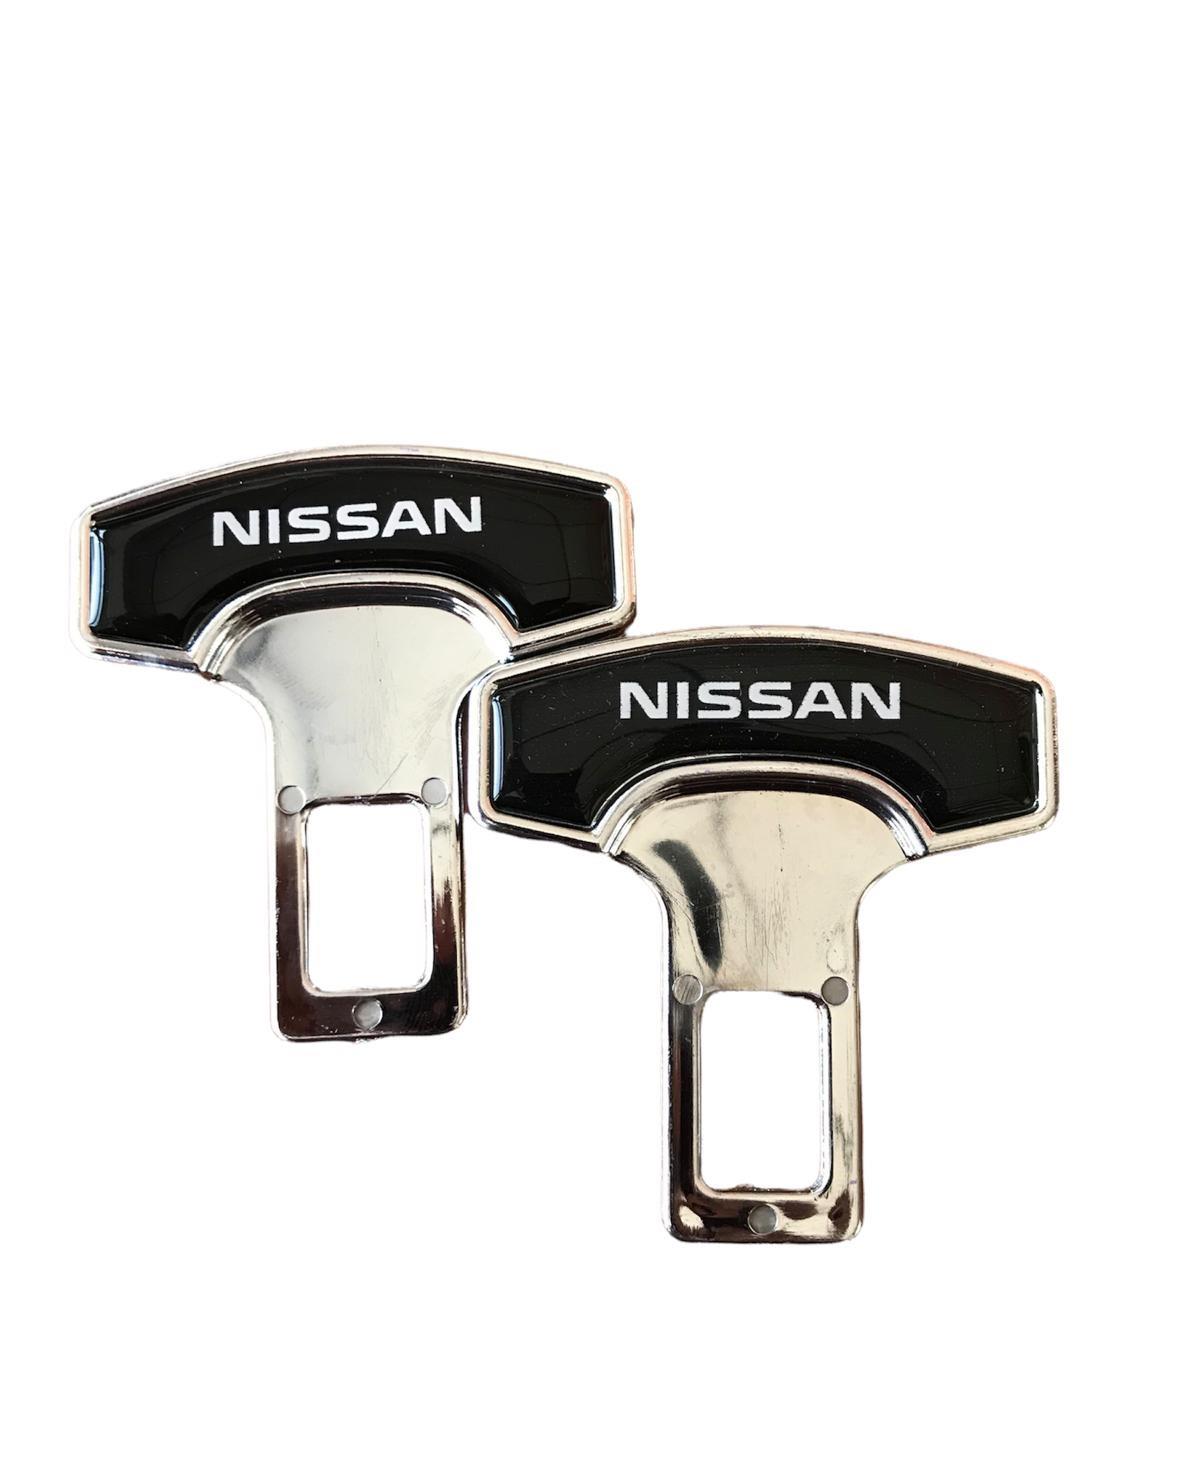 Oto Kemer Tokası Nissan Logolu 2 Adet